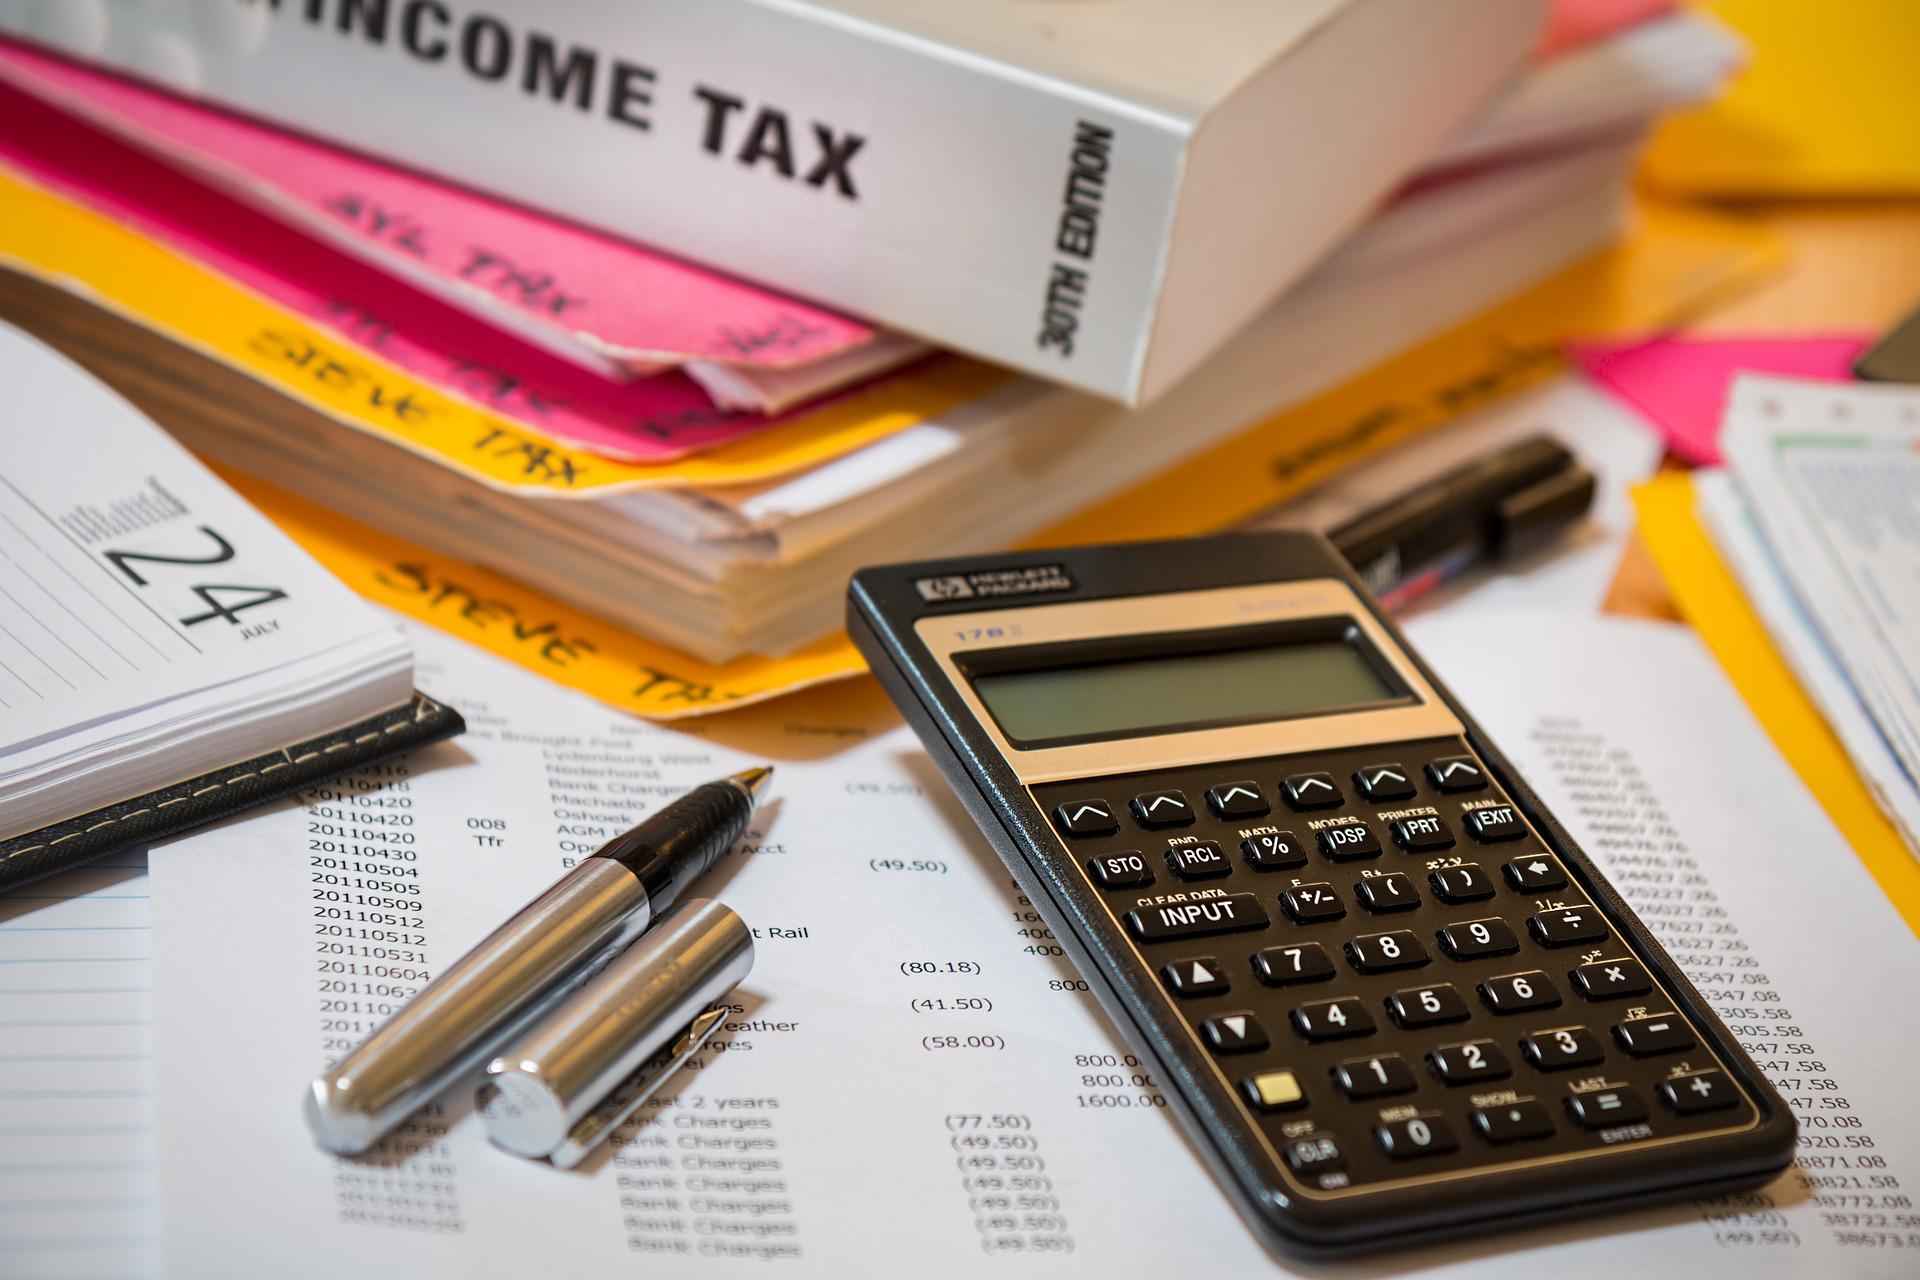 Capital Gains Tax due in the UK - Calculator